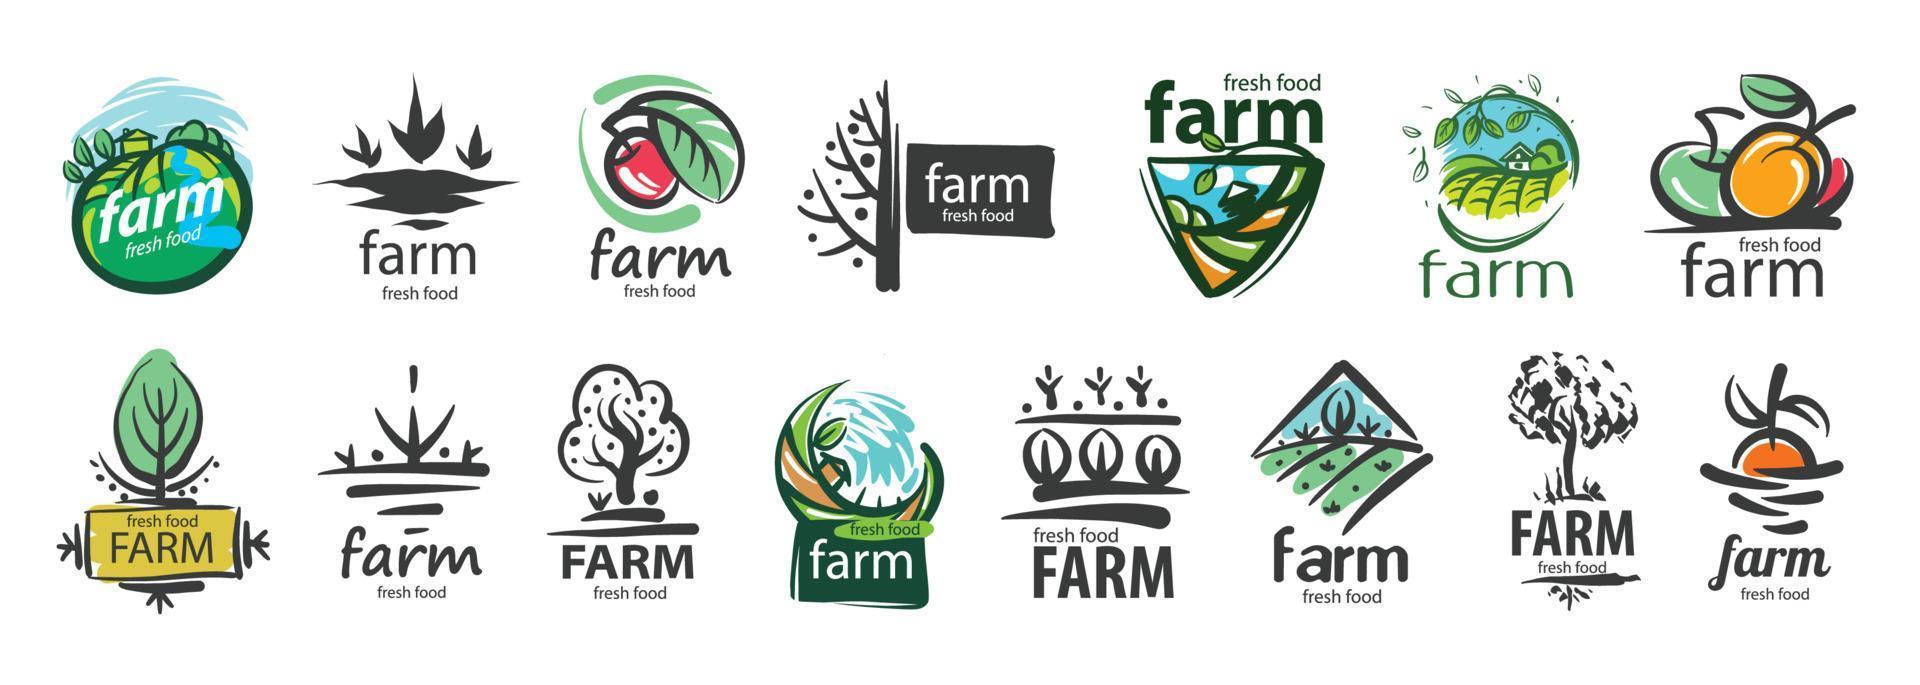 conjunto vetorial de logotipos para agricultura e fazendas vetor